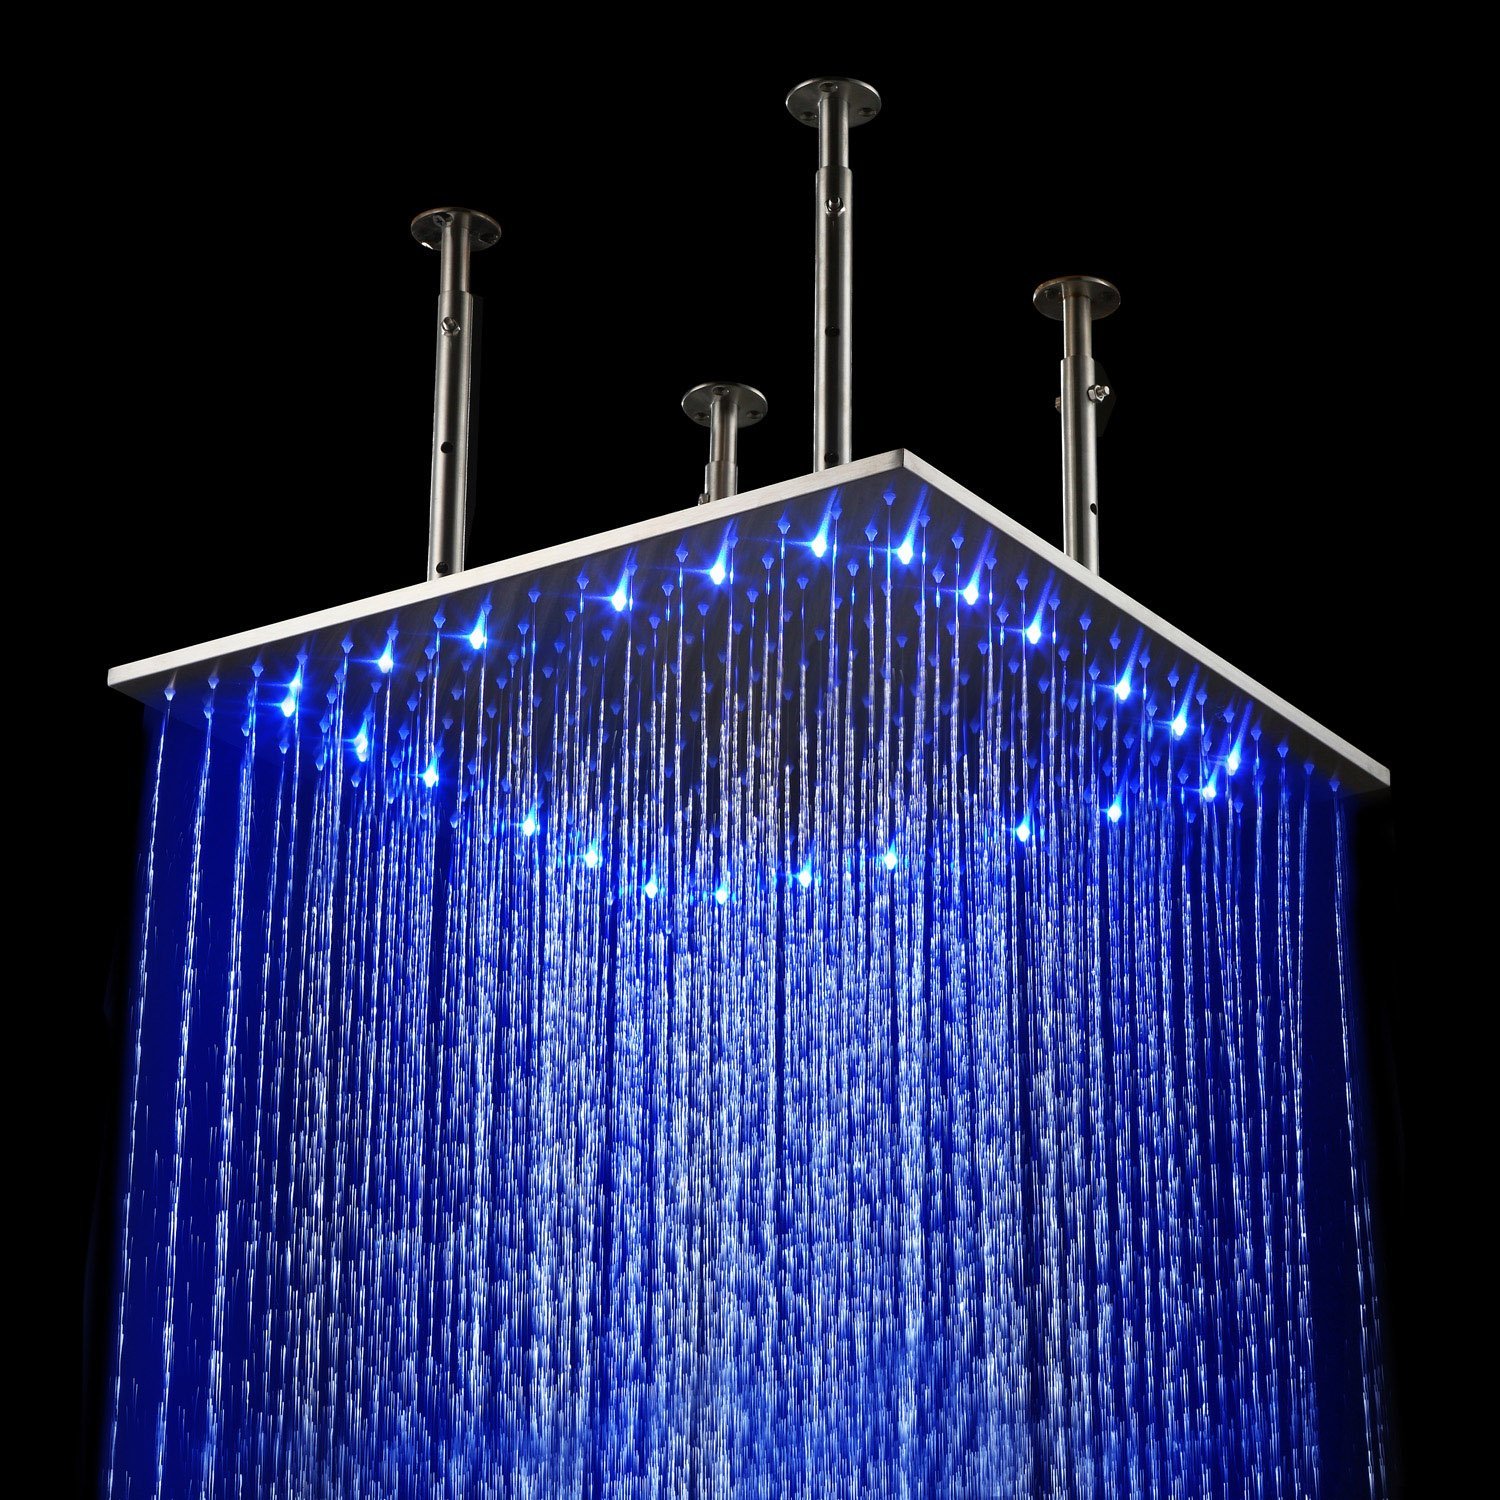 LightInTheBox 20 Inch Wall Mount Square Rainfall LED Shower Head